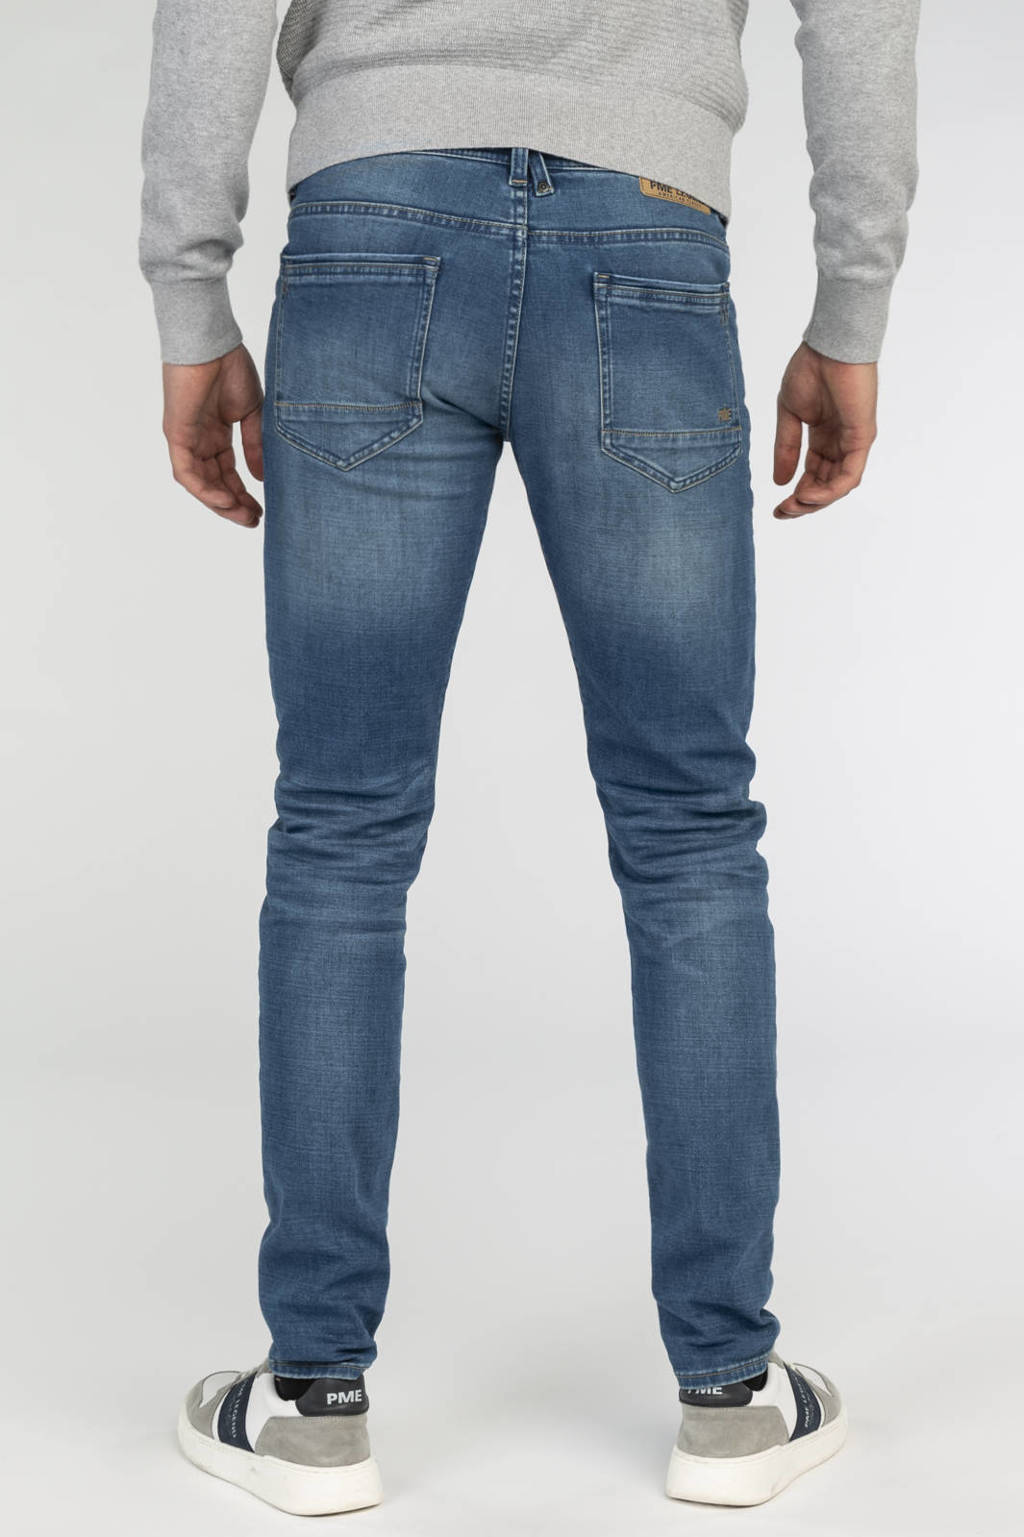 PME Legend Tailwheel –soft mid blue Jeans